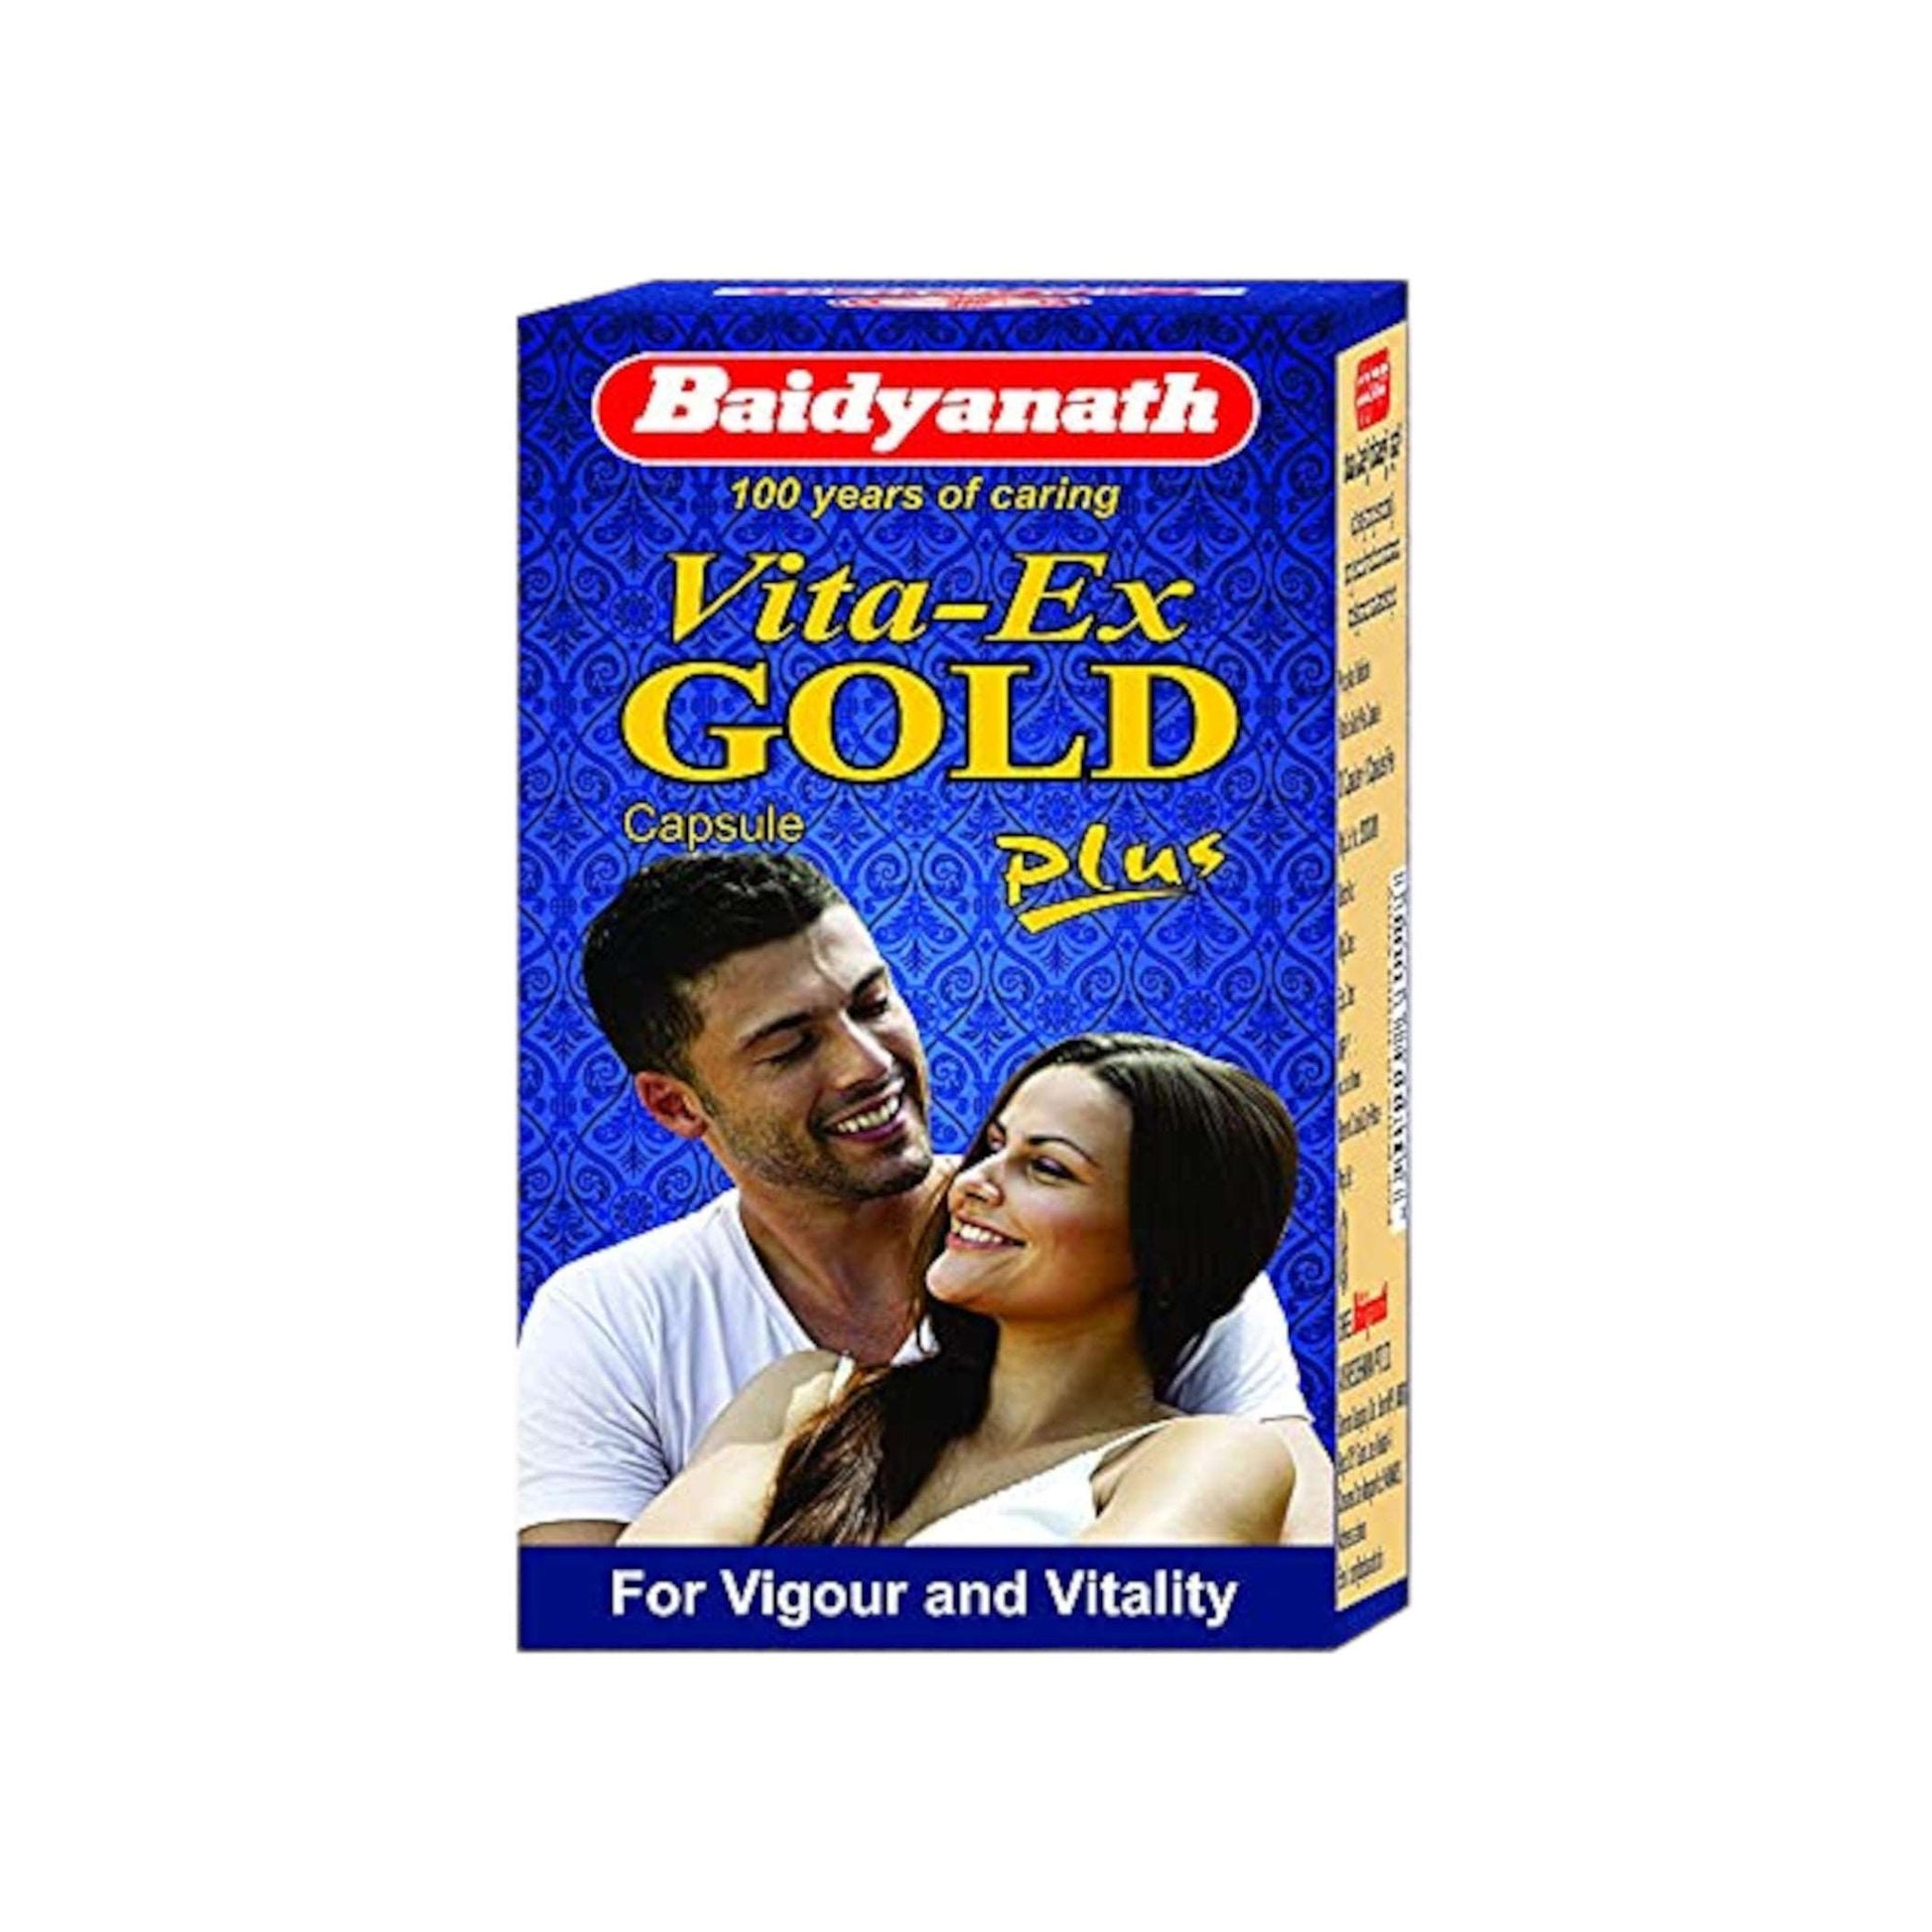 Image: Baidyanath Vita-Ex Gold Plus 20 Tablets: Ayurvedic vitality and sexual wellness.